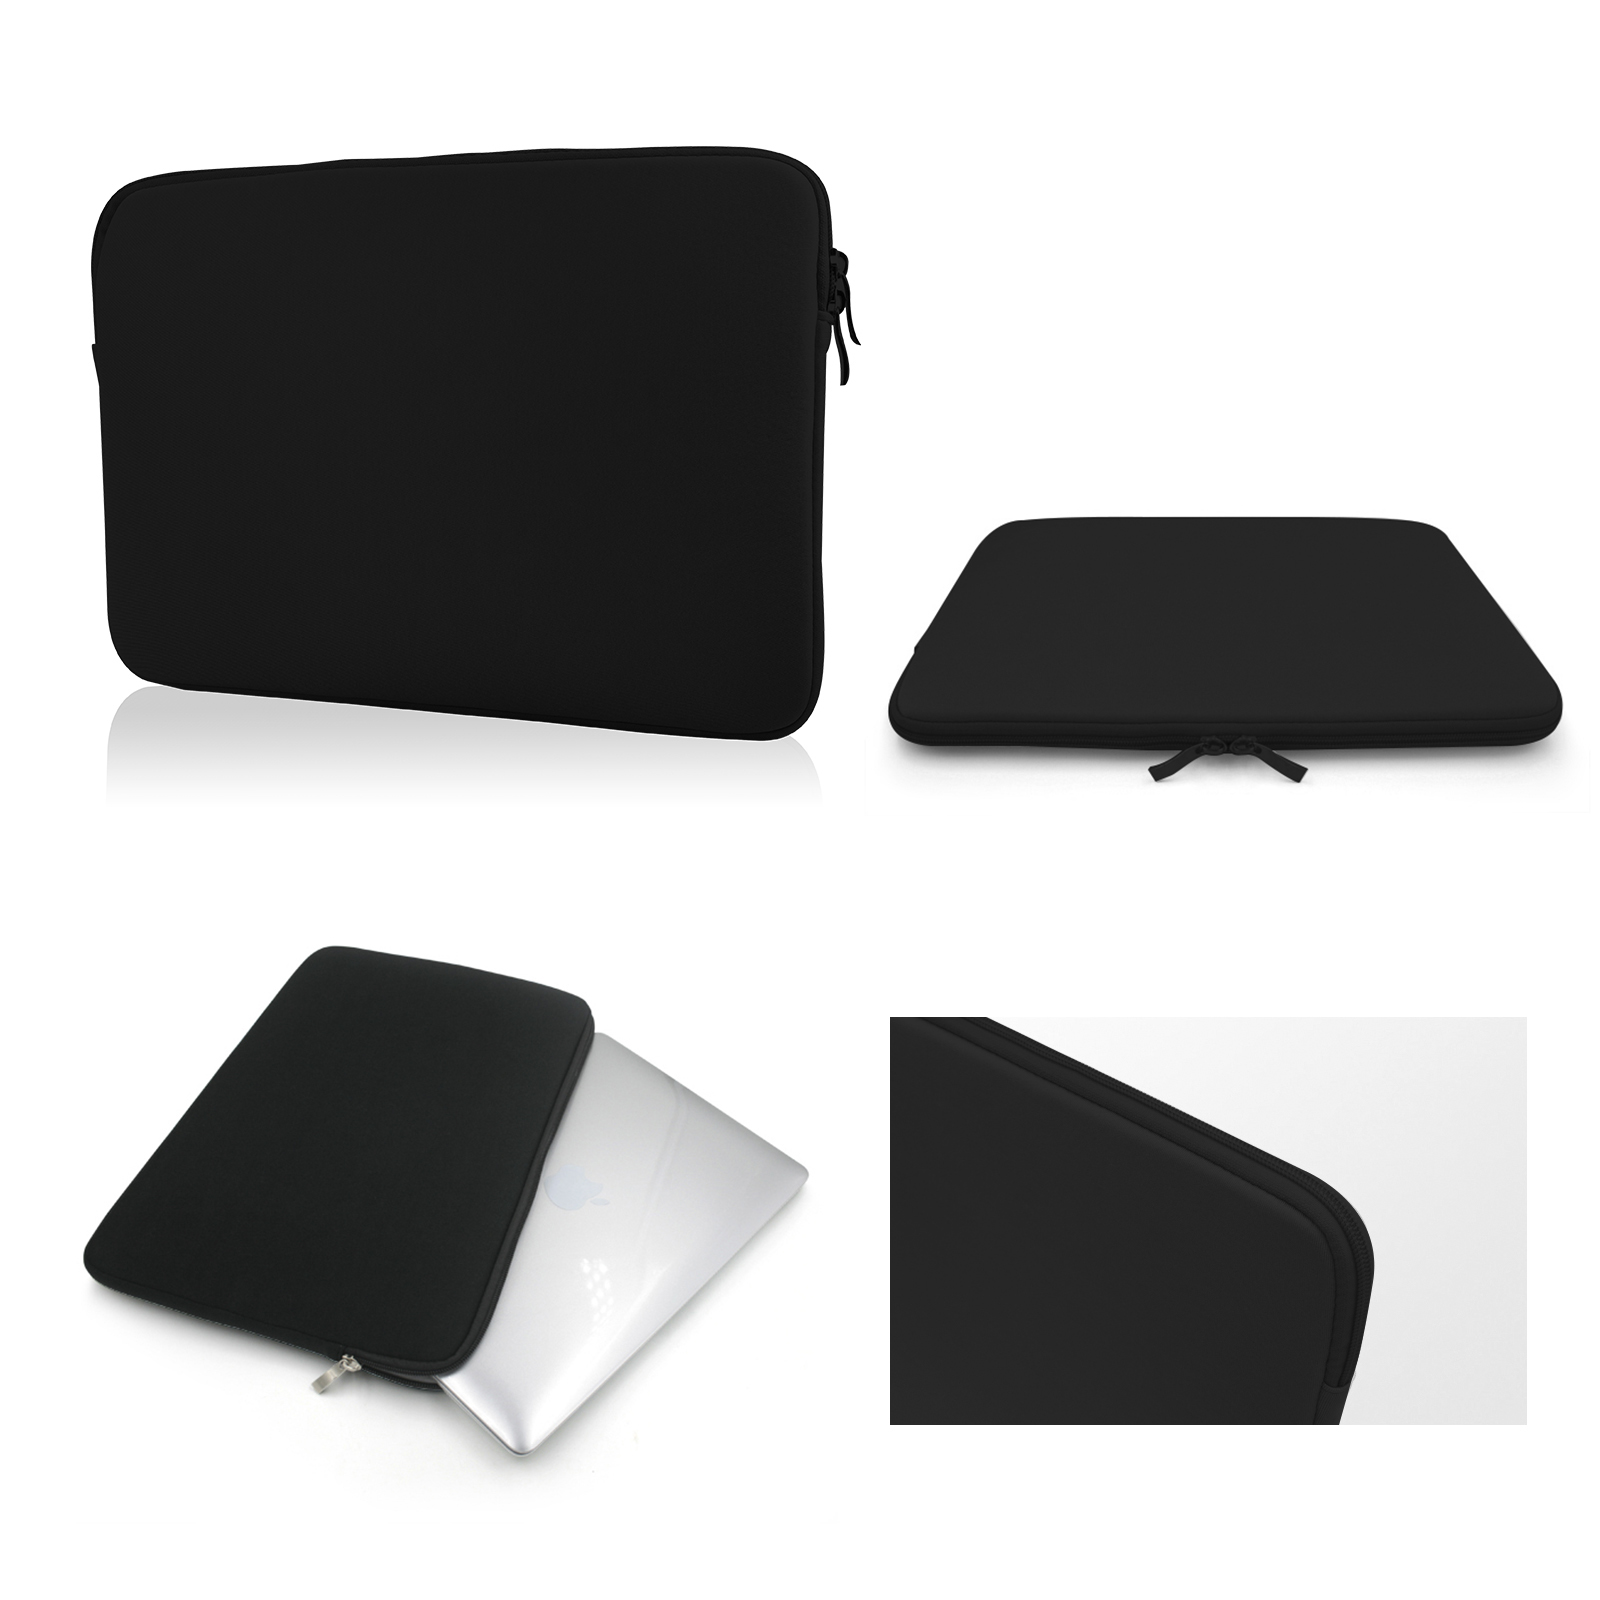 Hot Sale Binful Fashion Soft Sleeve Laptop Bag Case For Mac